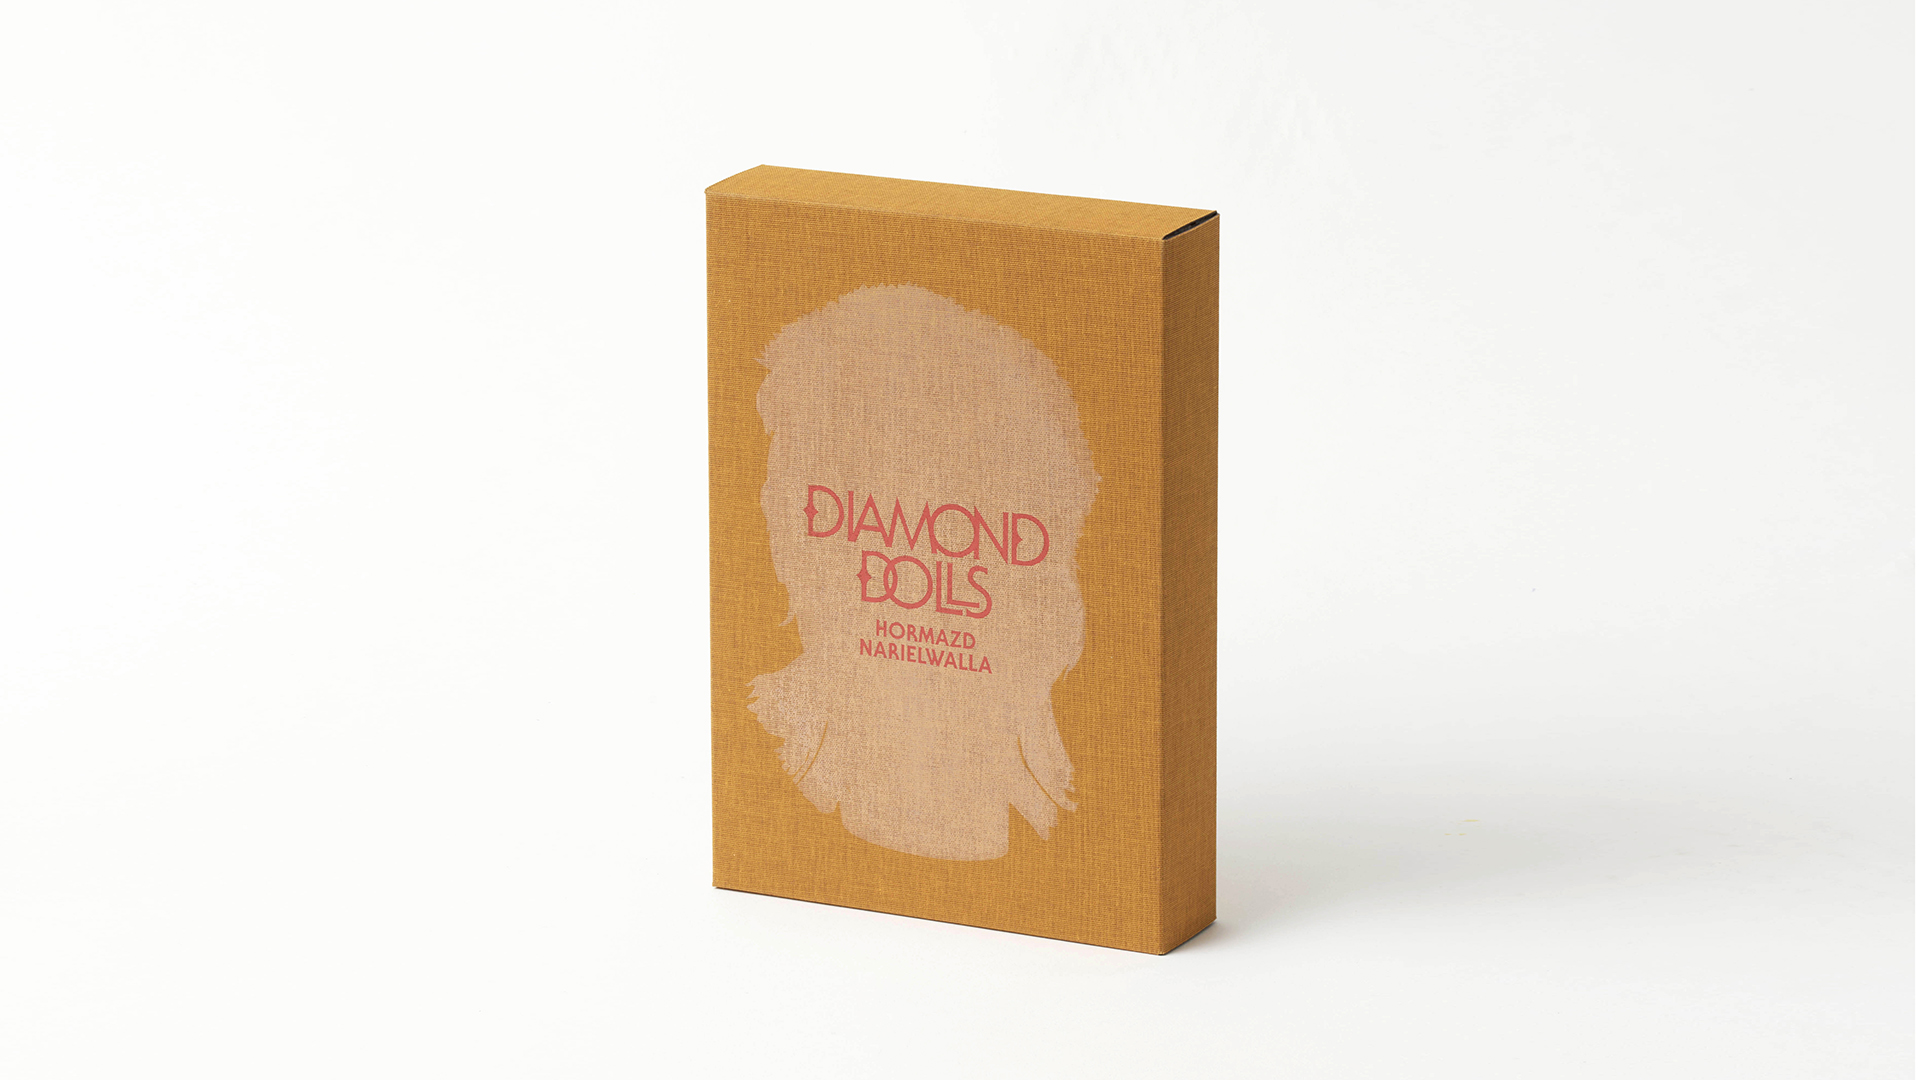 David Bowie Themed ‘Diamond Dolls’ Book